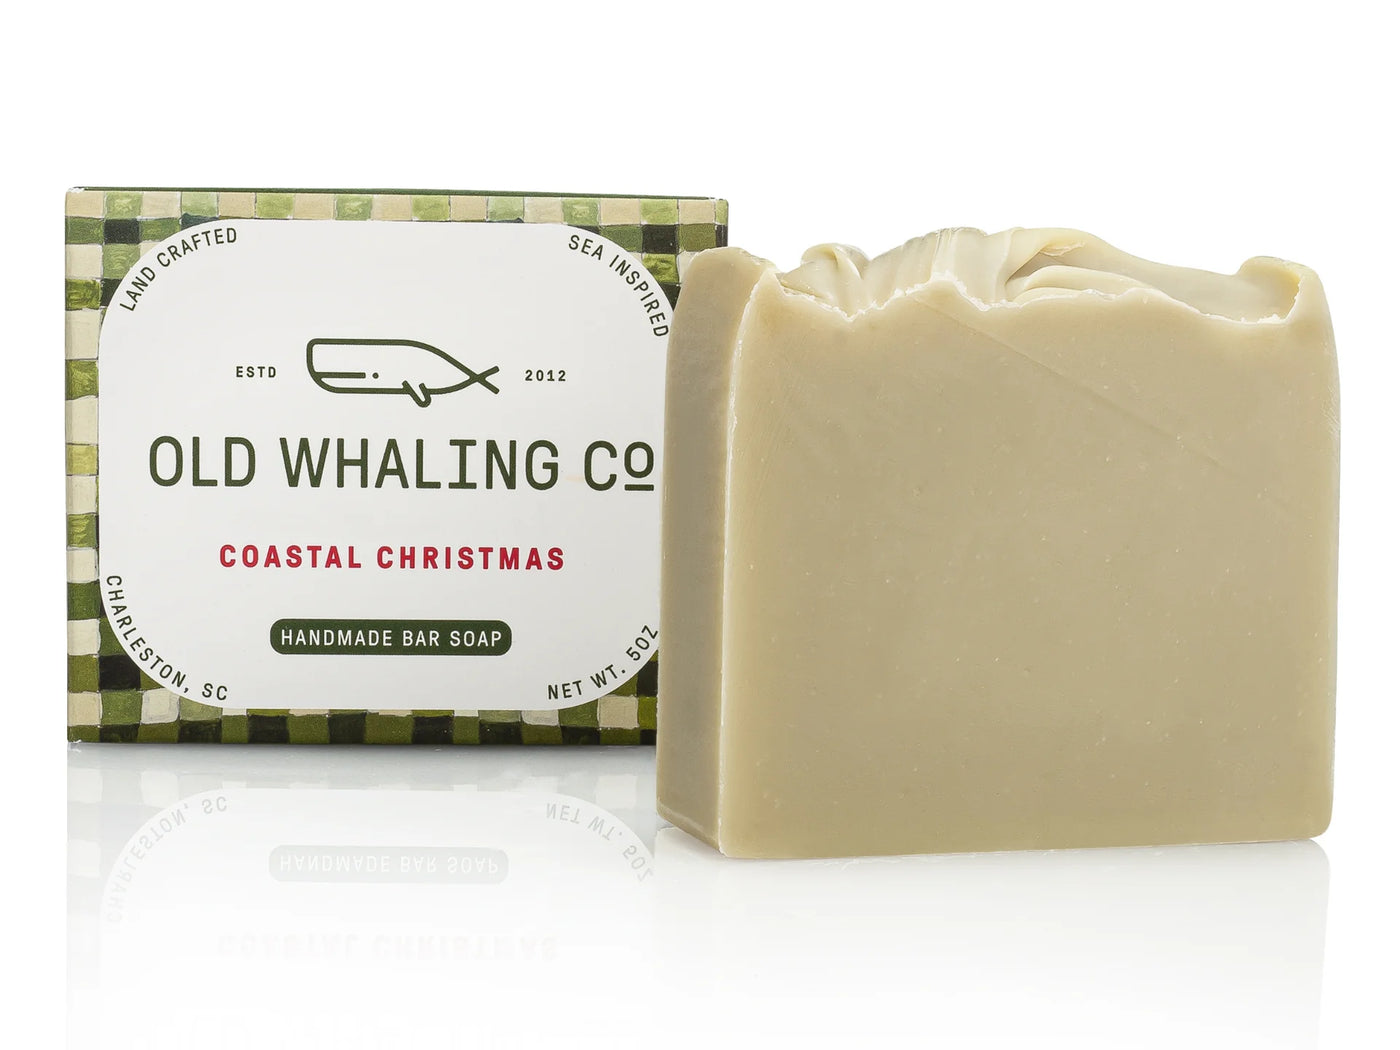 Old Whaling Co Coastal Christmas bar soap